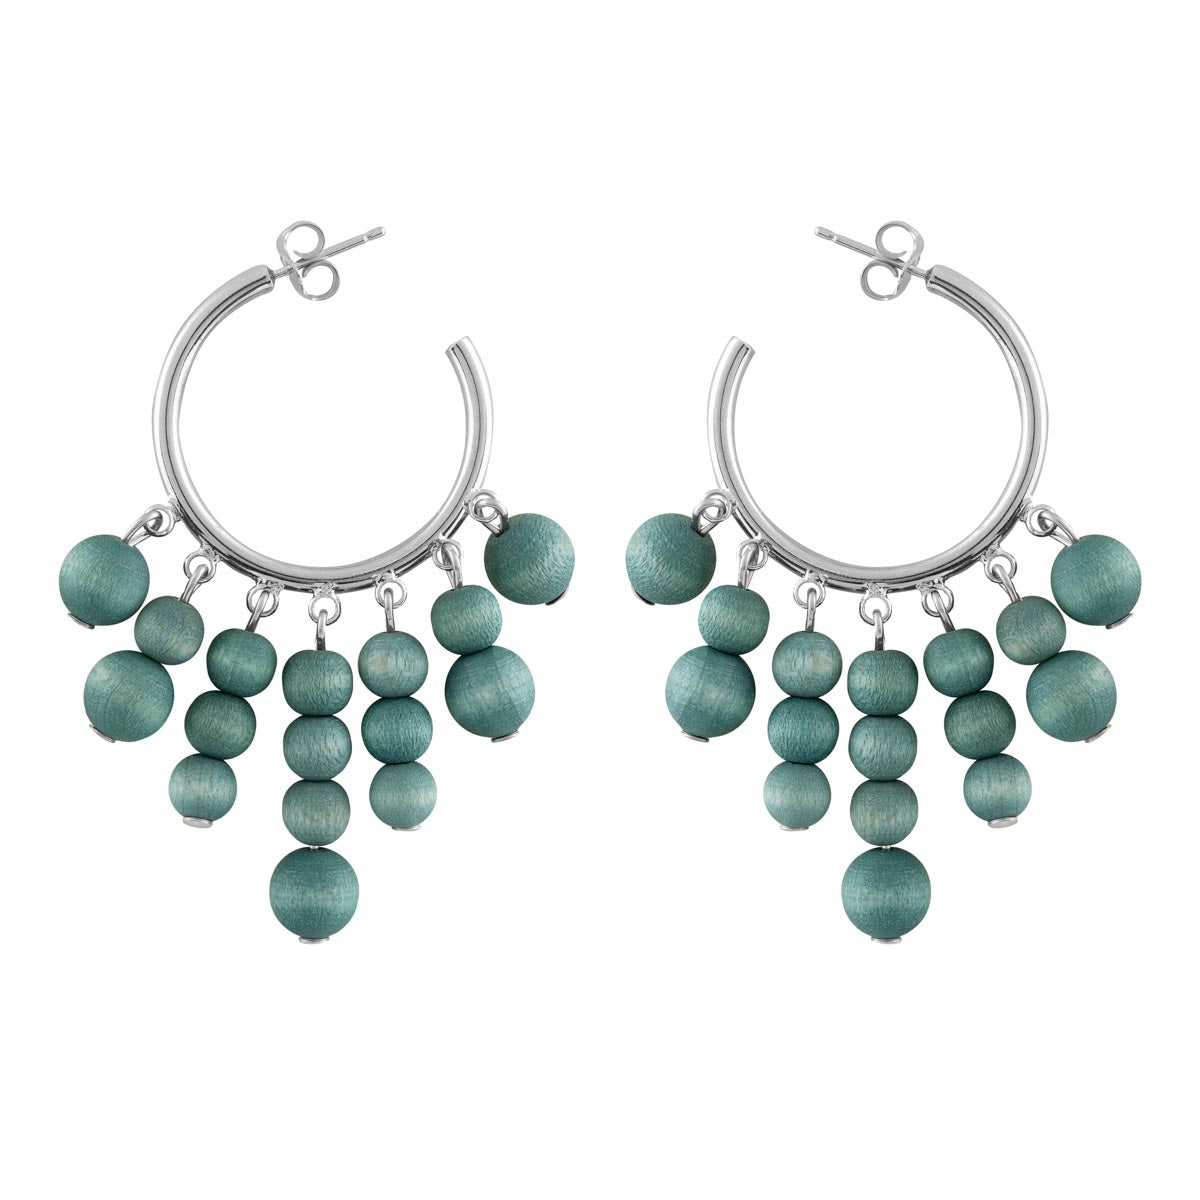 Gisella earrings, blue and green